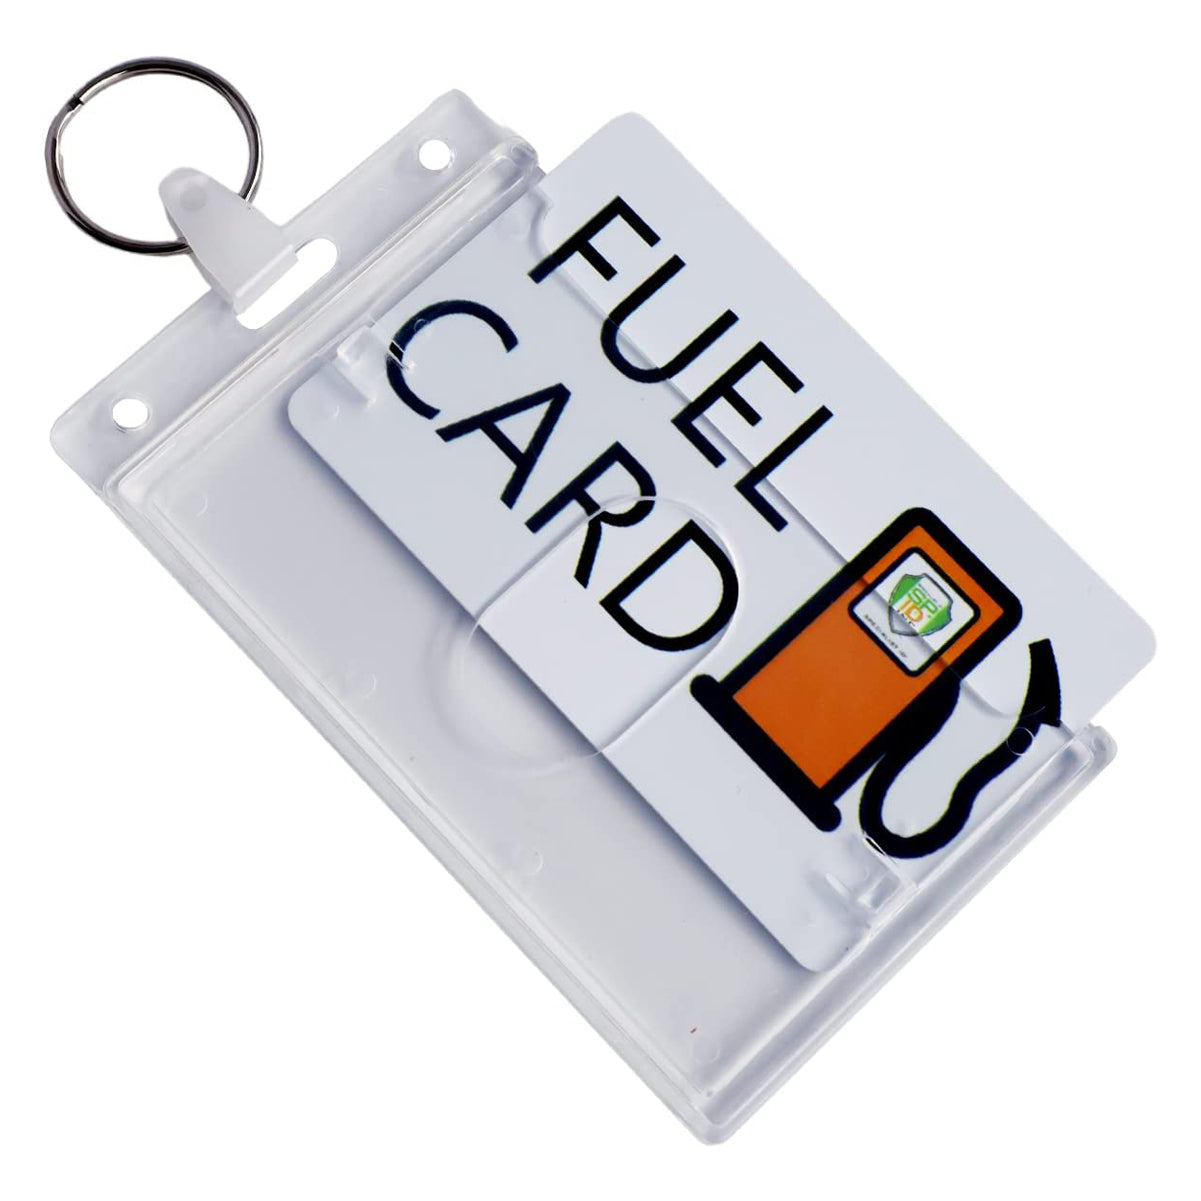 Rigid Fuel Card Holder with Key Ring by Specialist ID